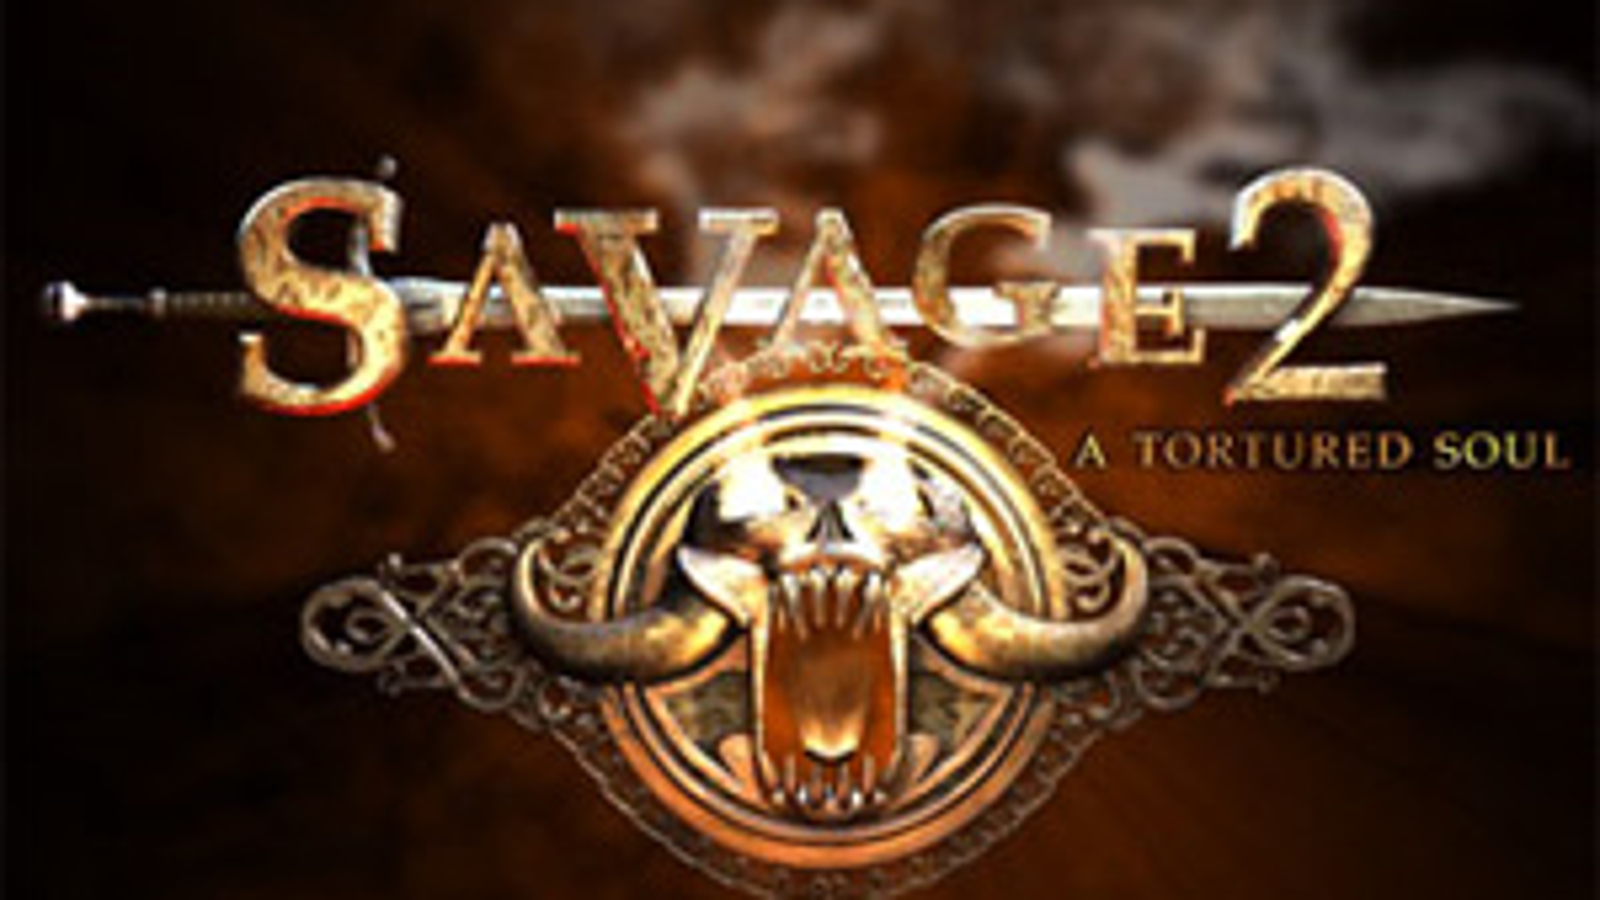 savage 2 a tortured soul free